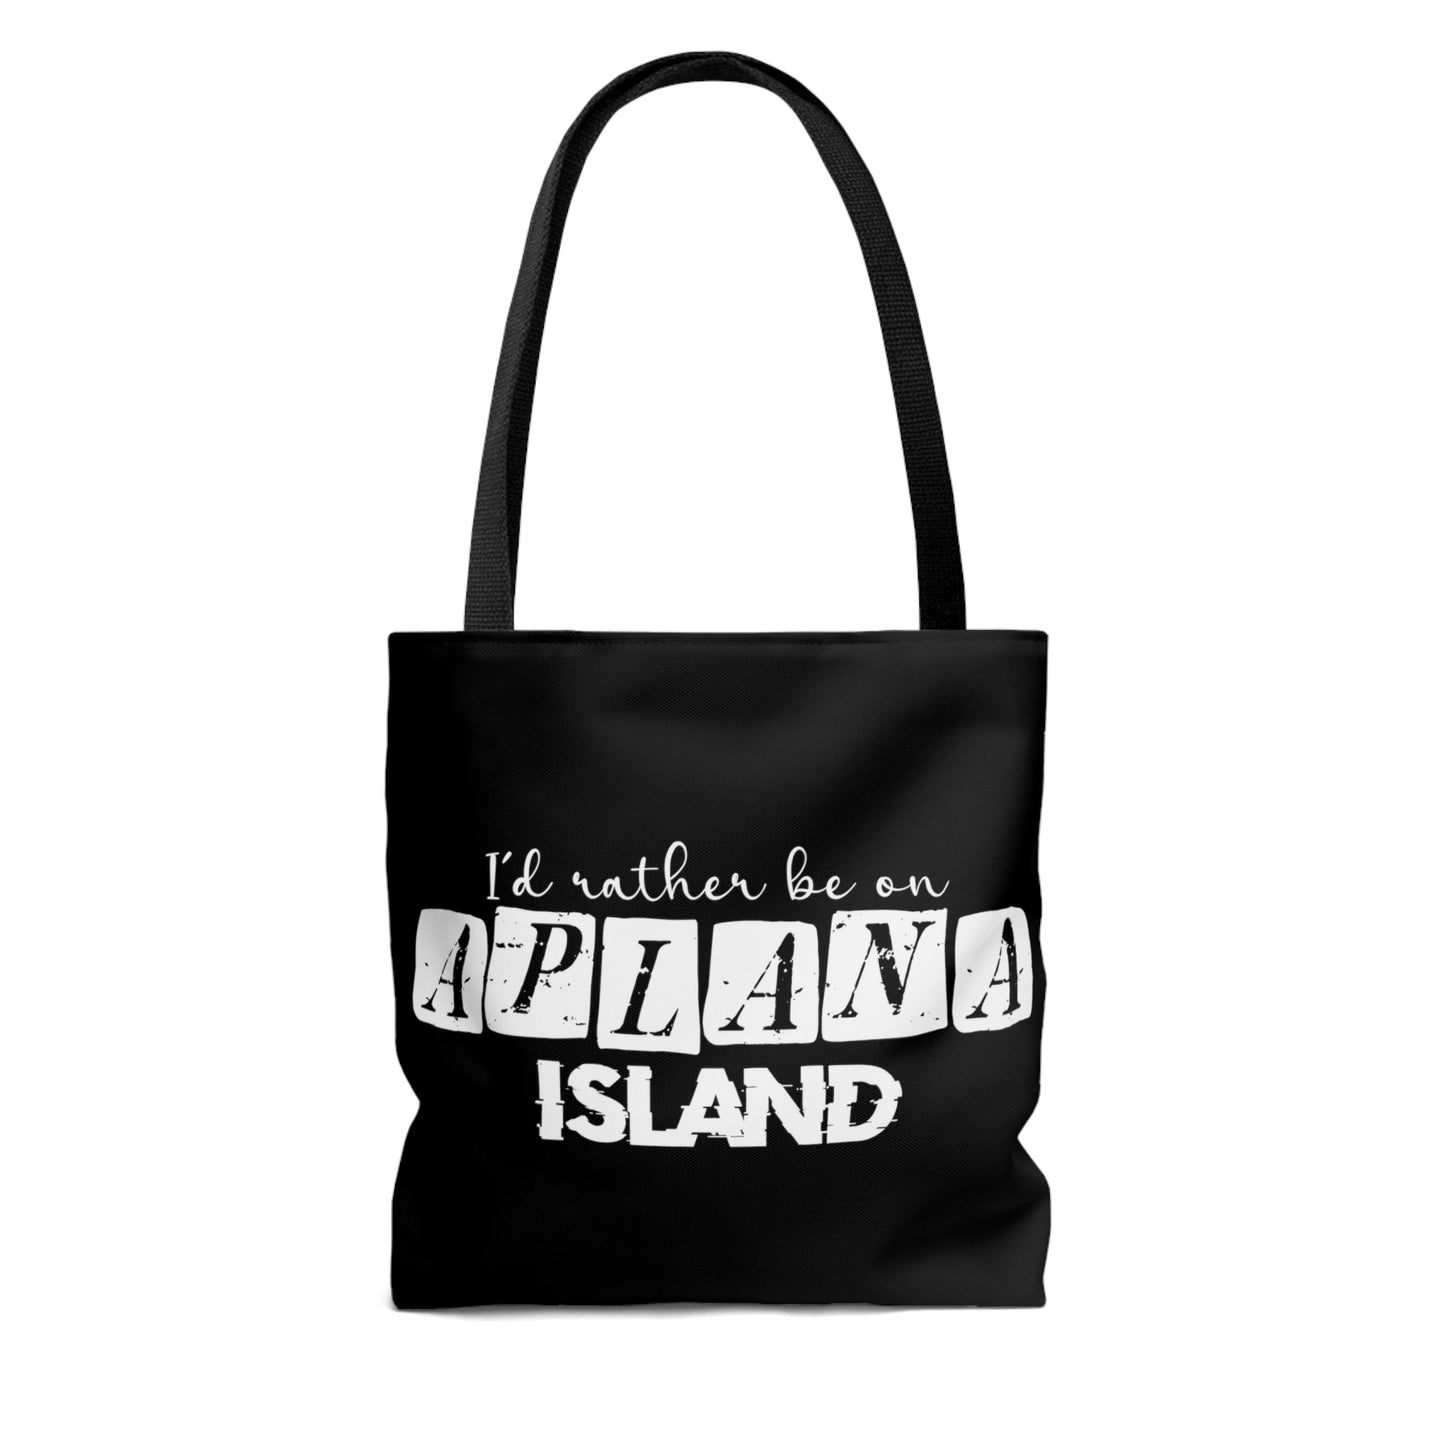 Aplana Island Bag